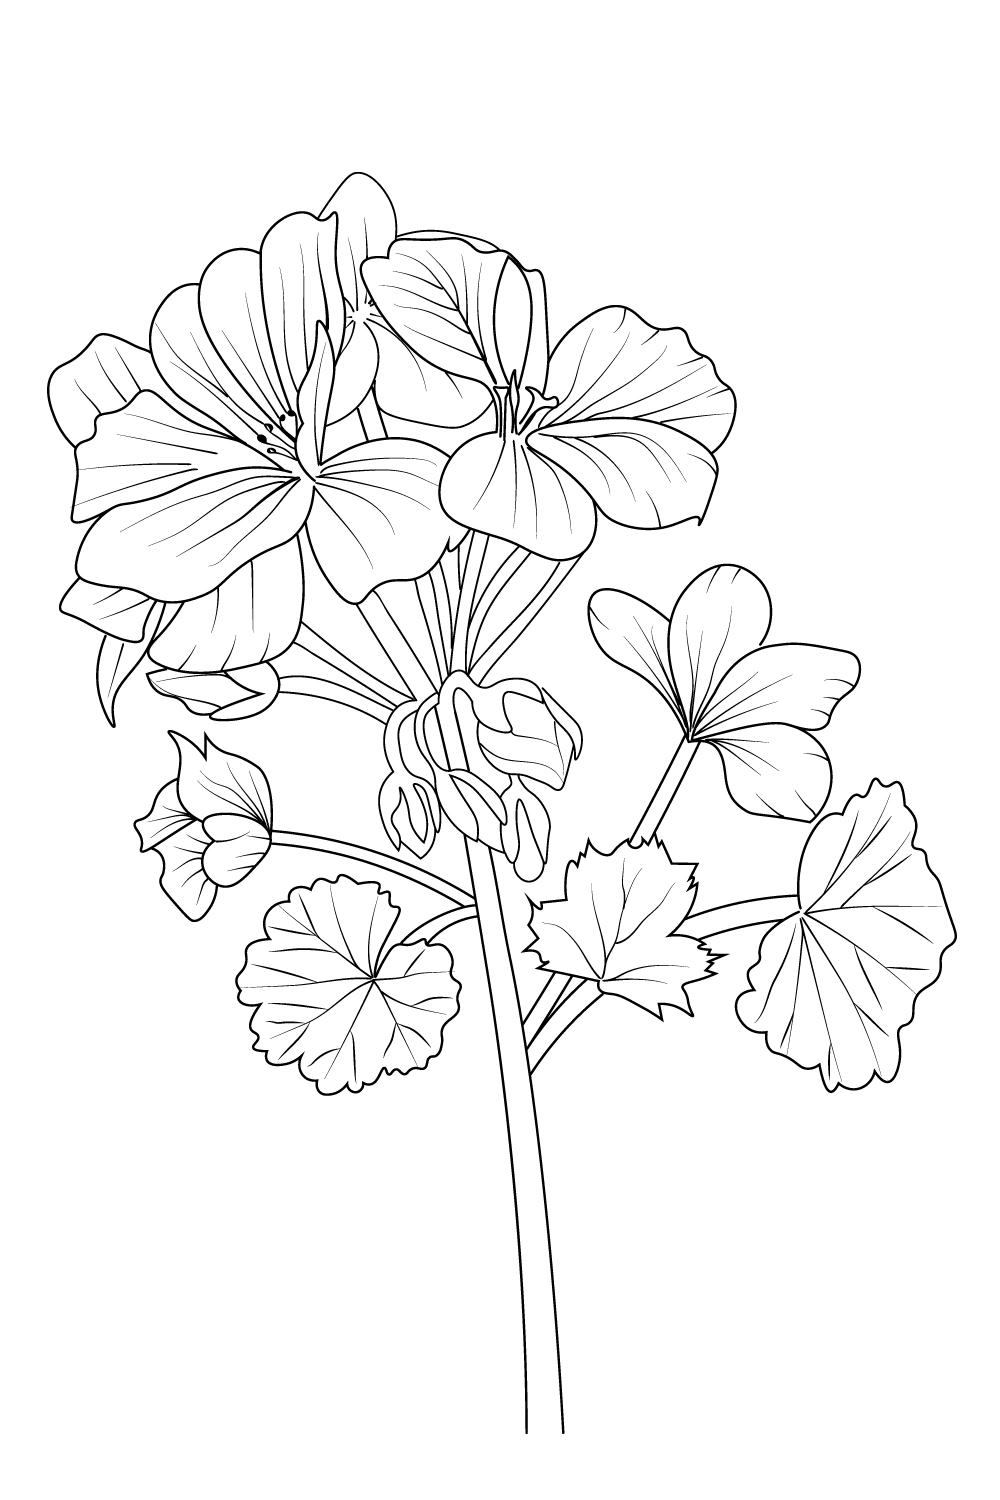 Geranium flower line art, botanical geranium drawing, watercolor botanical geranium drawing, Pelargonium quercifolium, easy geranium drawing, geranium outline drawing pinterest preview image.